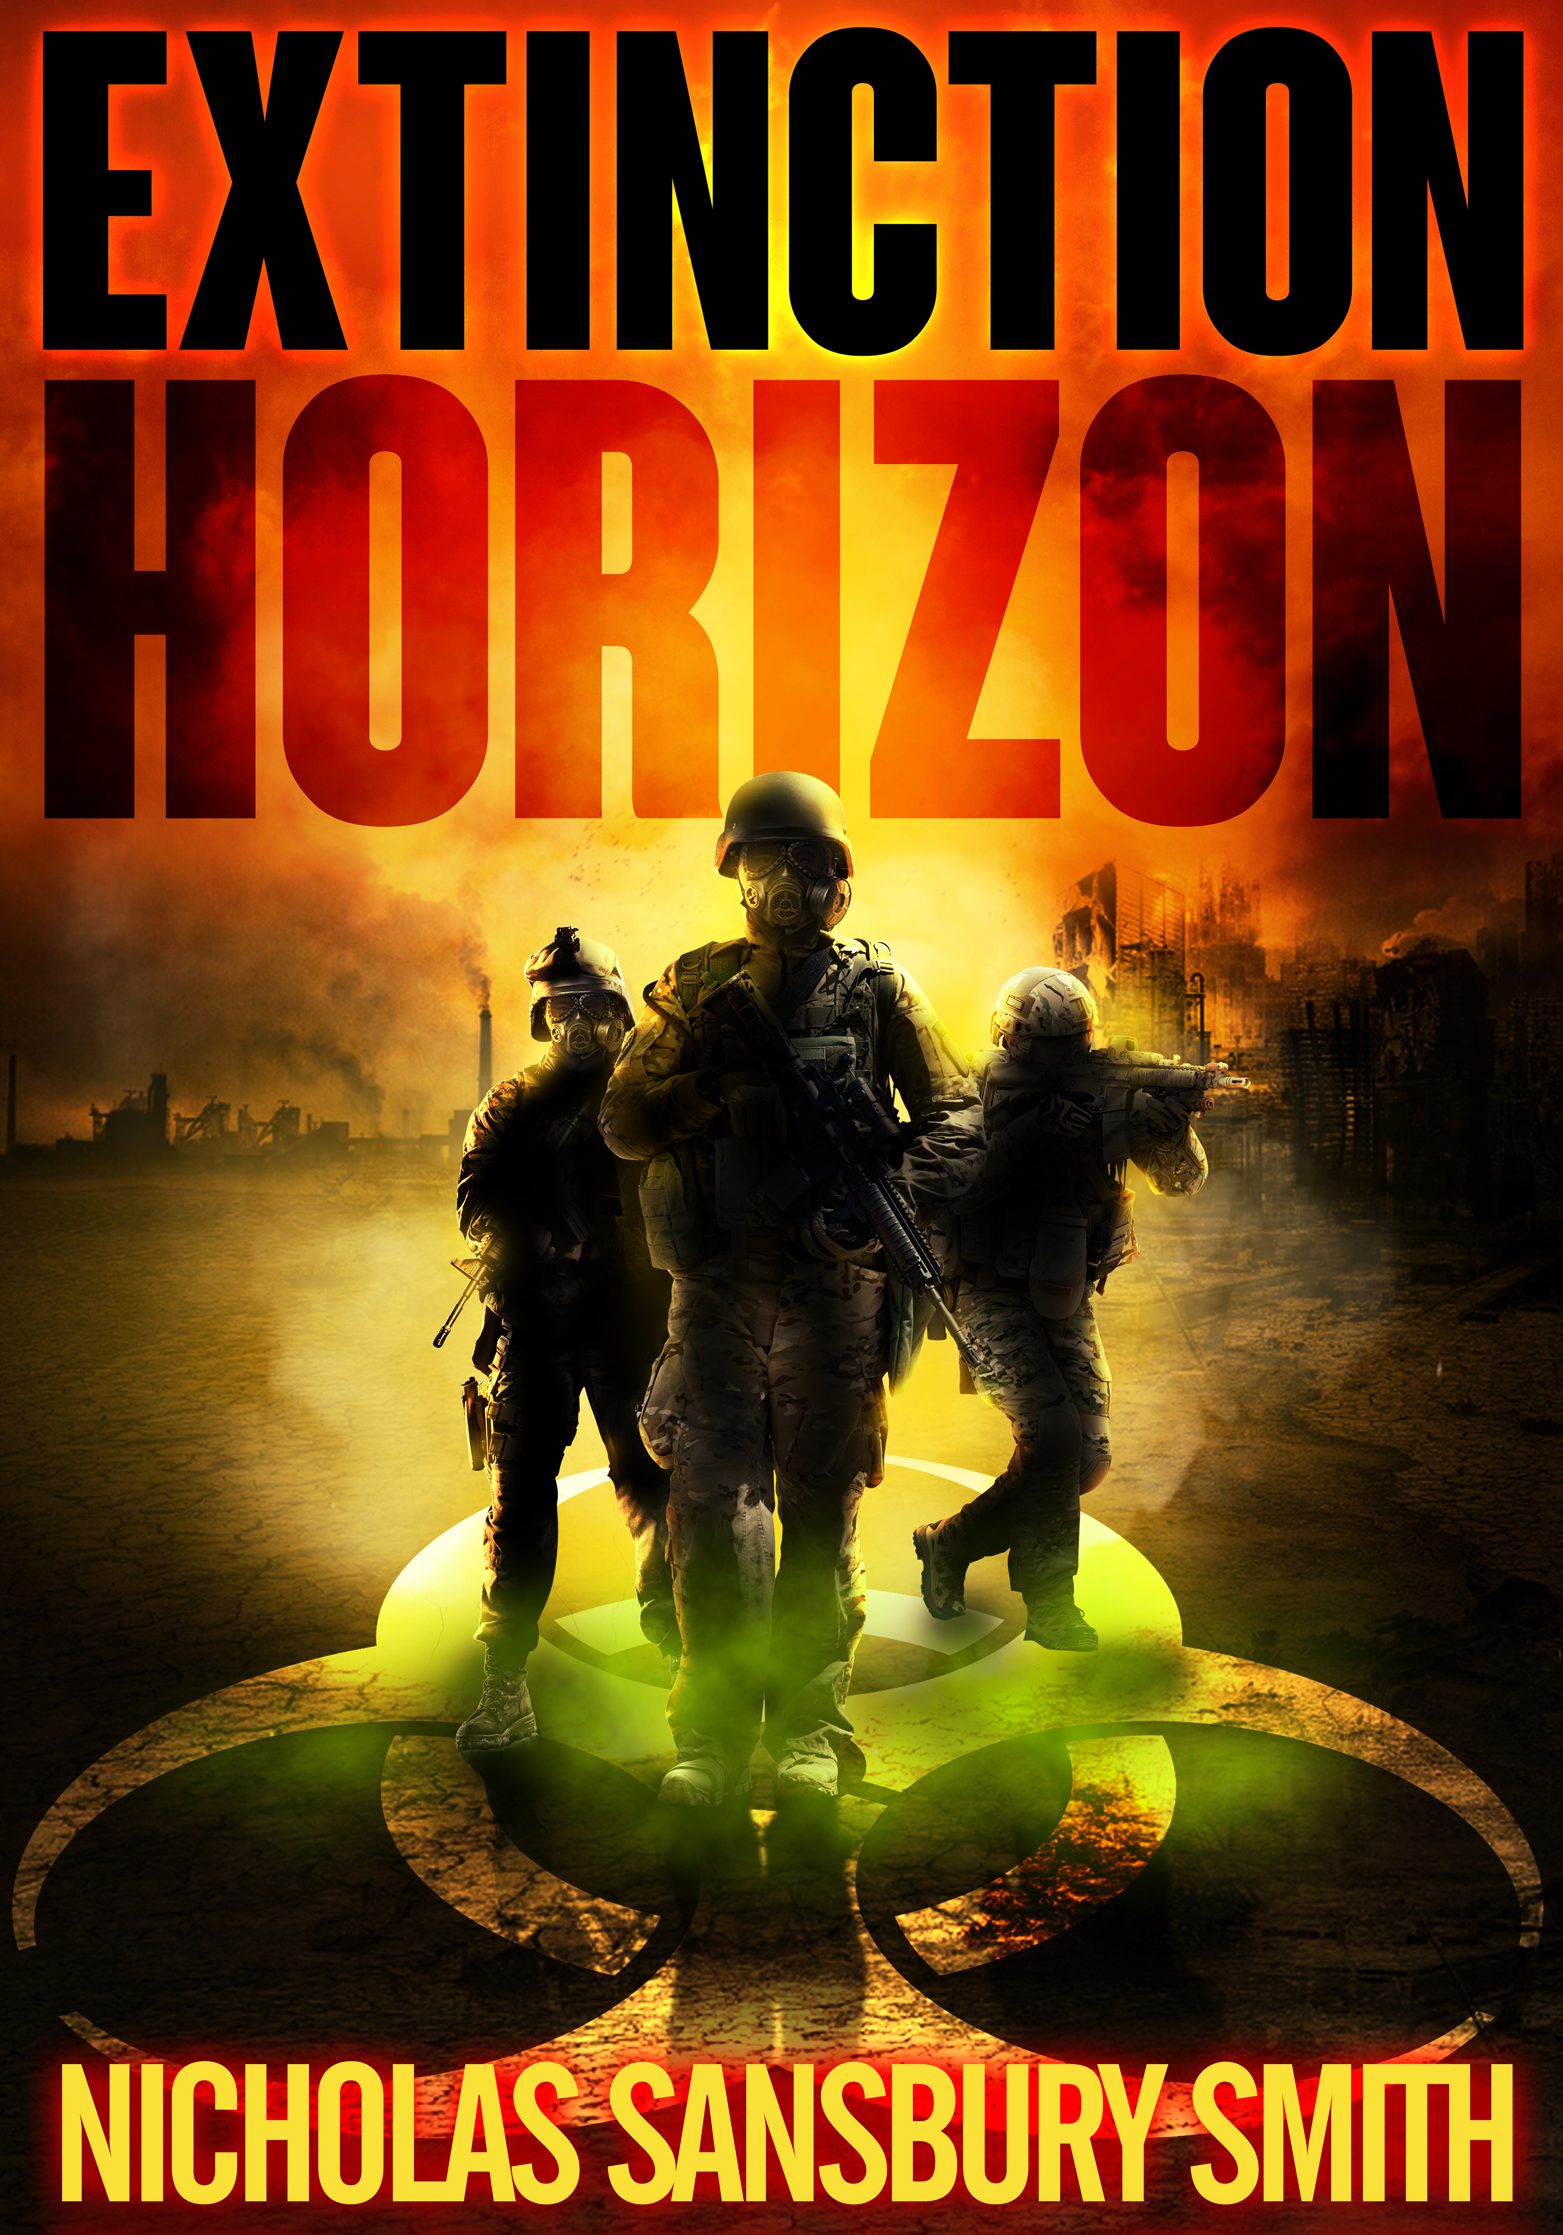 Extinction Horizon book trailer loewenherz creative